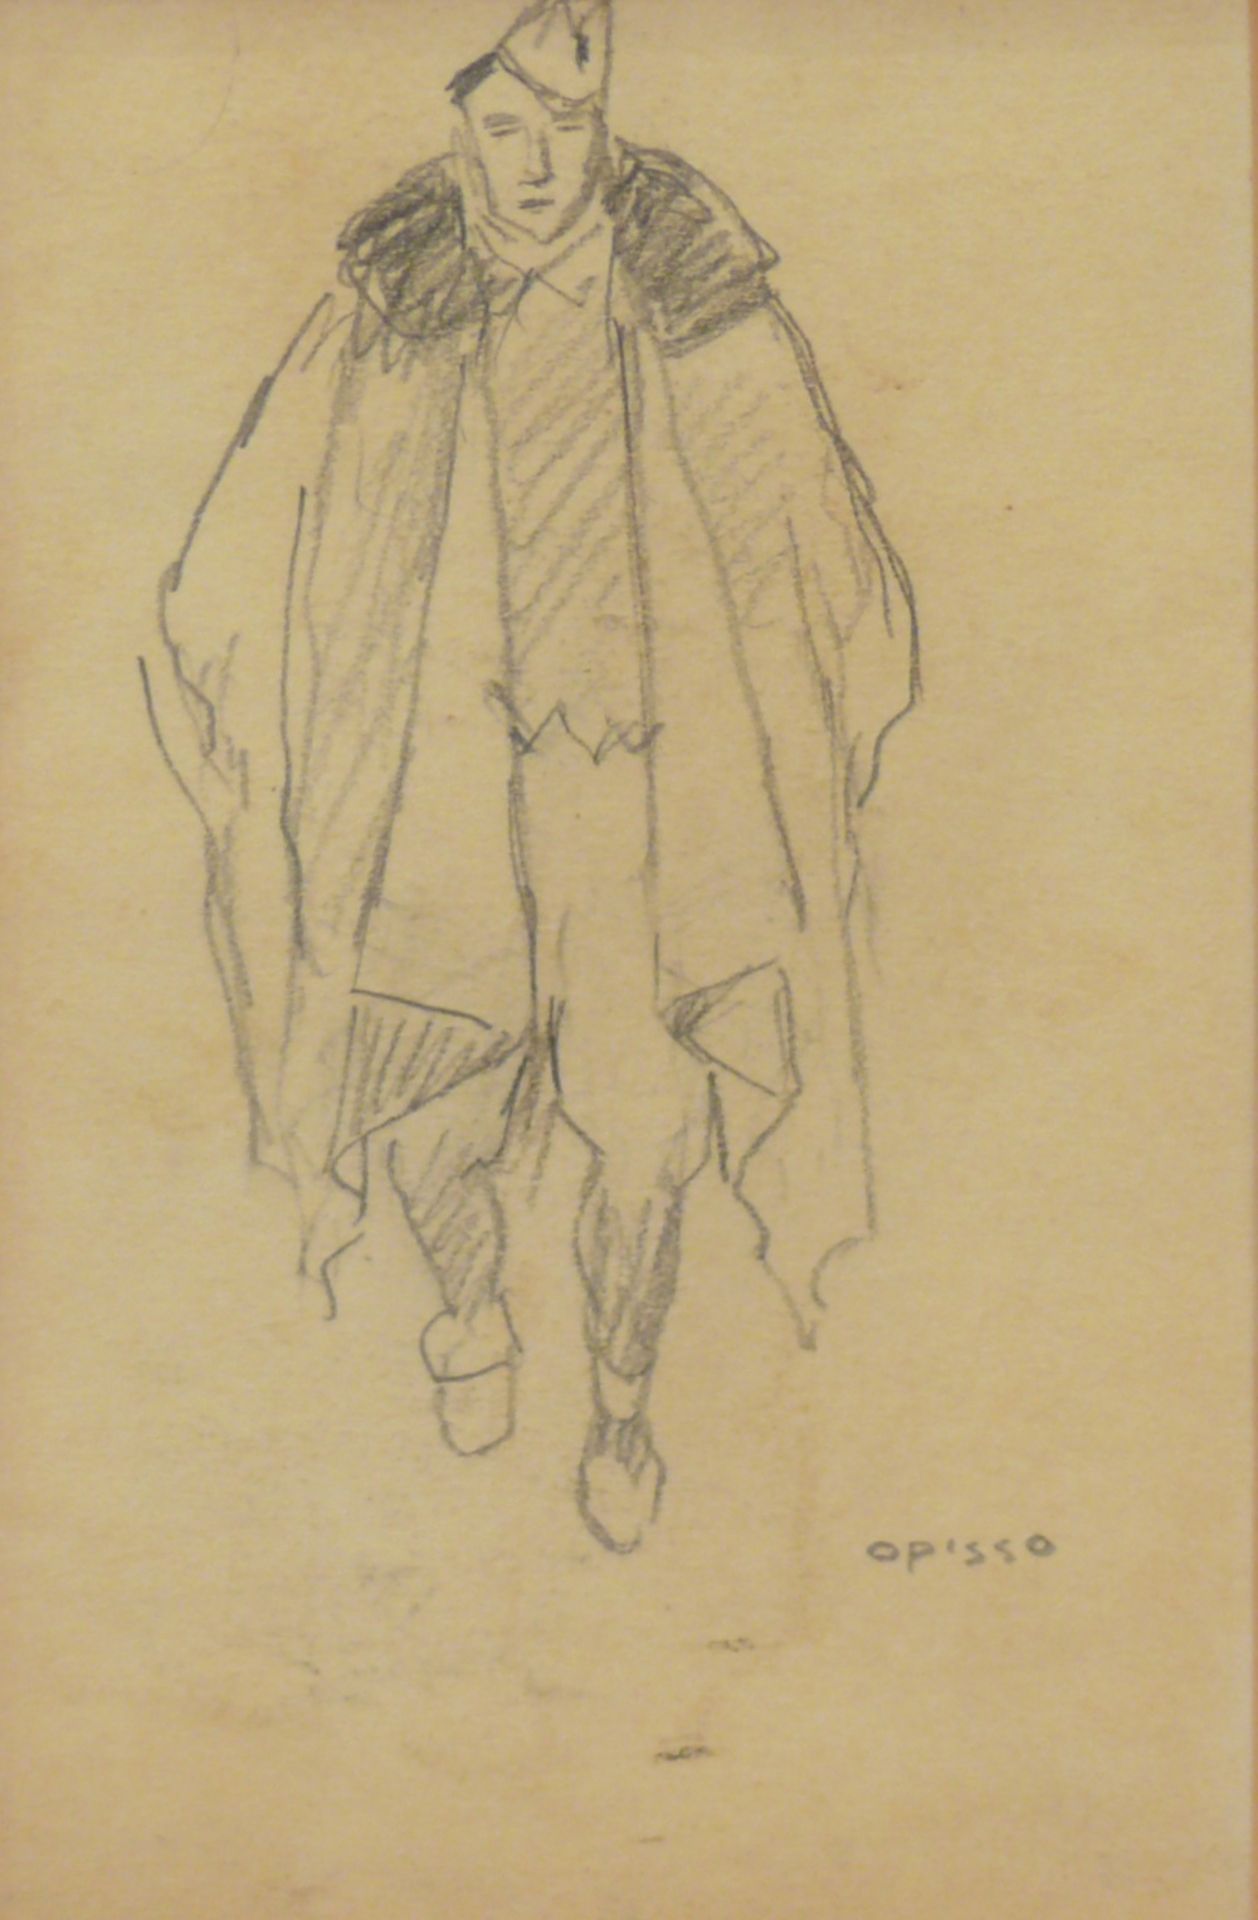 RICARD OPISSO (Tarragona, 1880-Barcelona, 1966). "Personaje", dibujo a lápiz sobre papel, 18x11